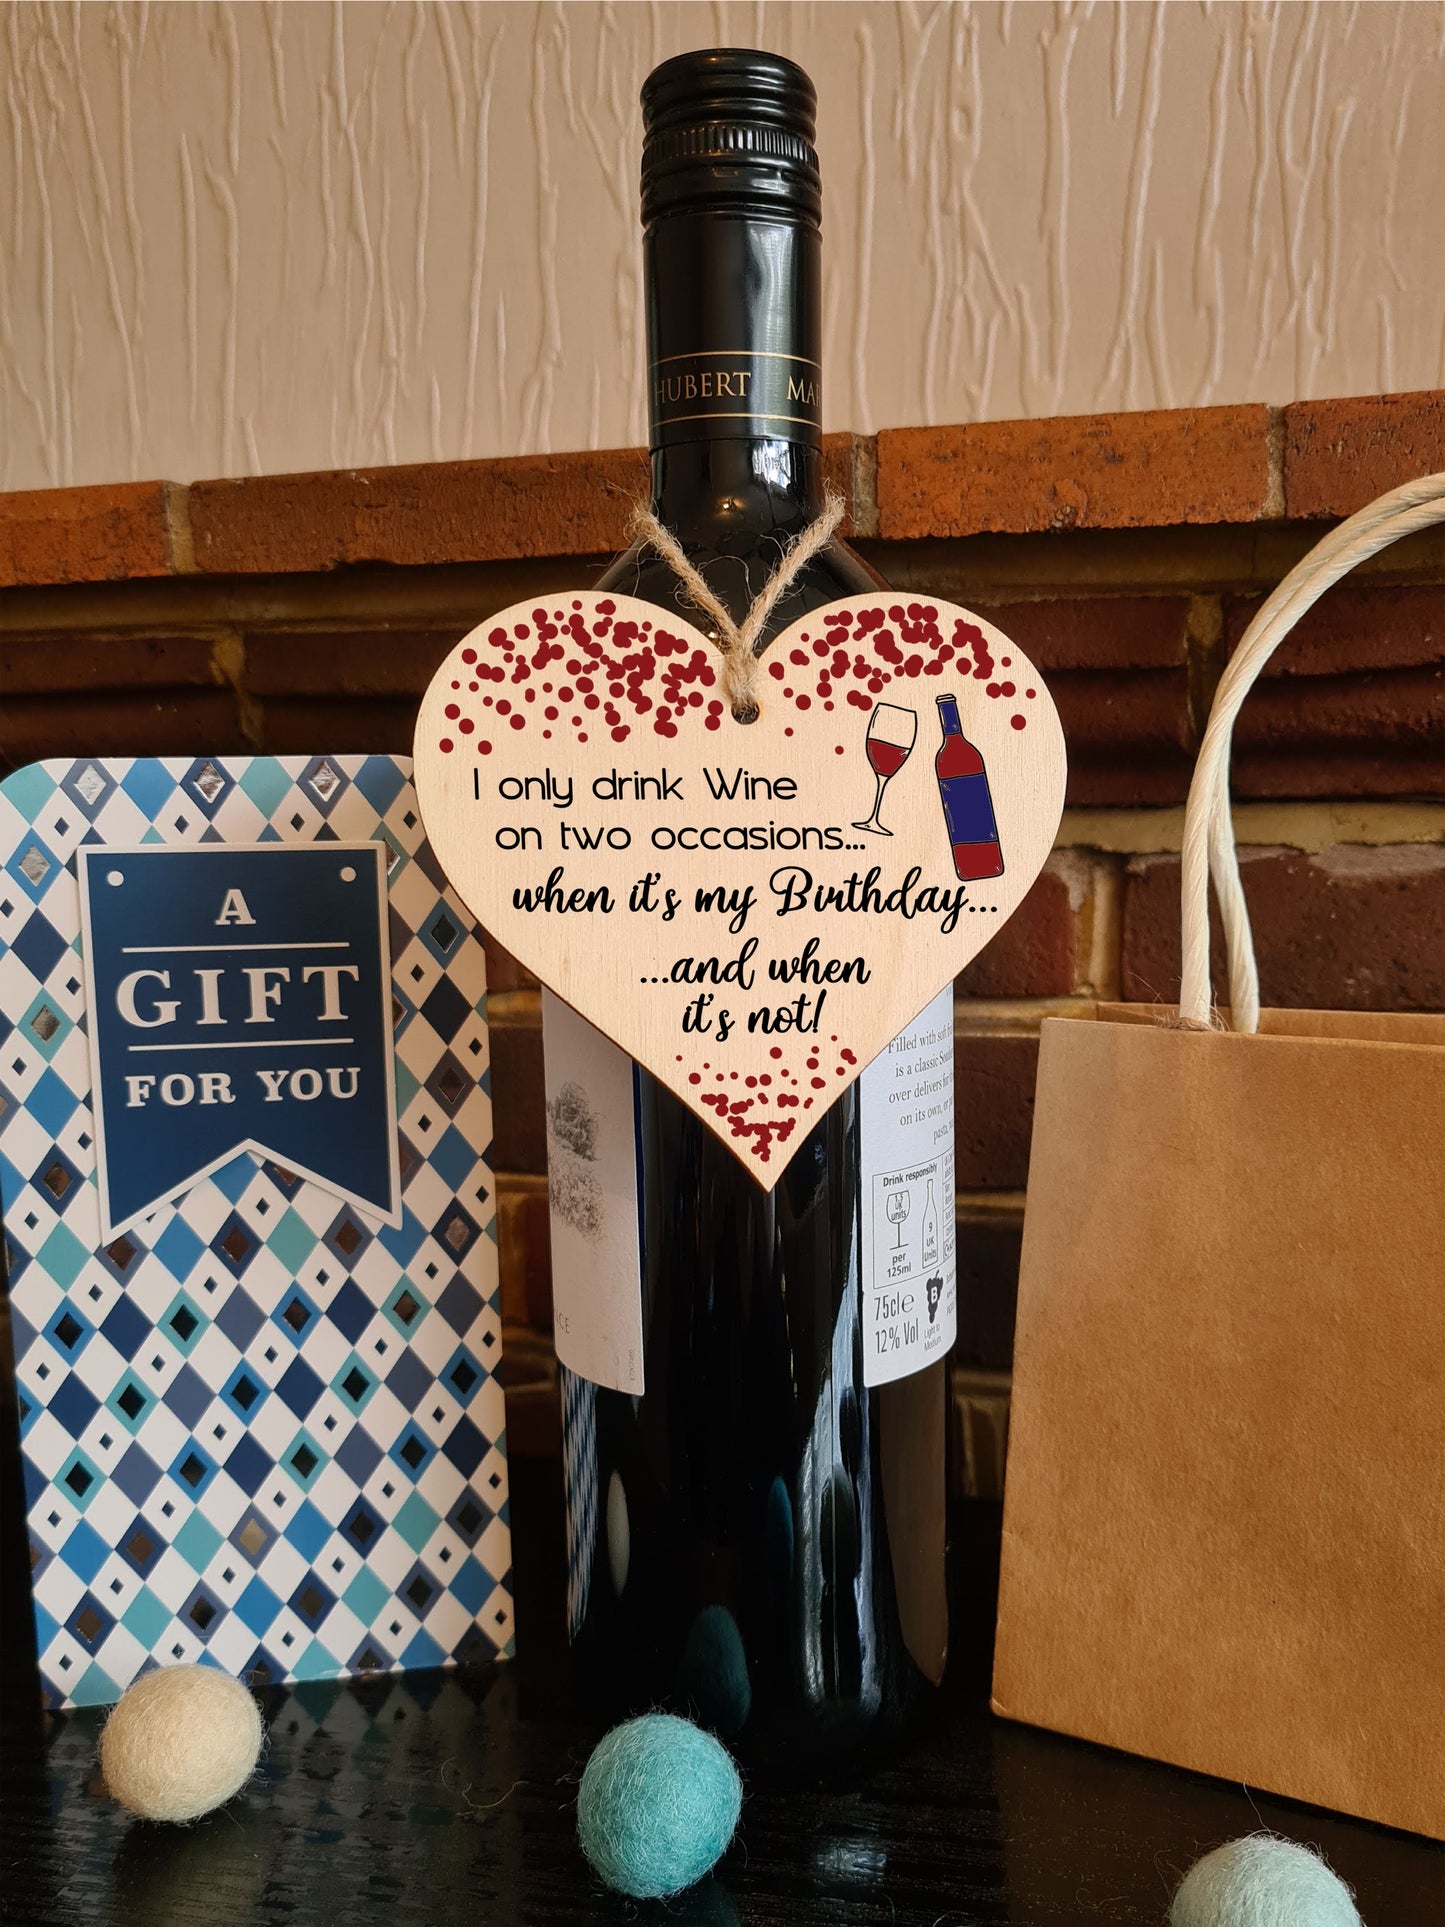 Handmade Wooden Hanging Heart Plaque Gift for Wine Lovers Novelty Funny Birthday Keepsake